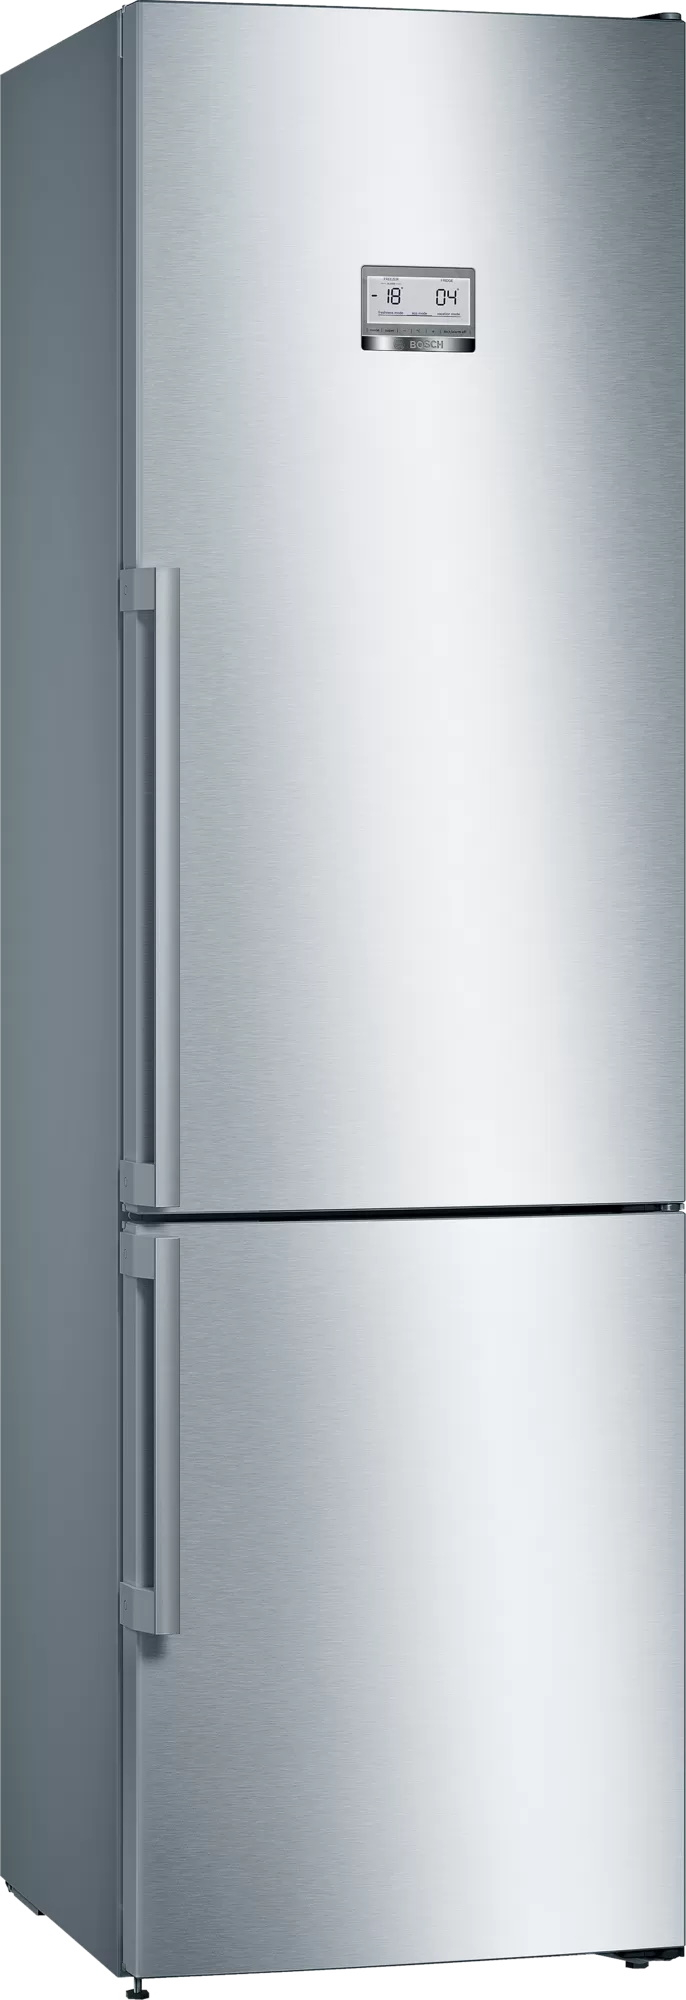 Combina frigorifica Bosch KGN39AIEQ Serie 6 NoFrost 366 litri net Clasa A++ WiFi Ready usi Inox easyClean Bosch